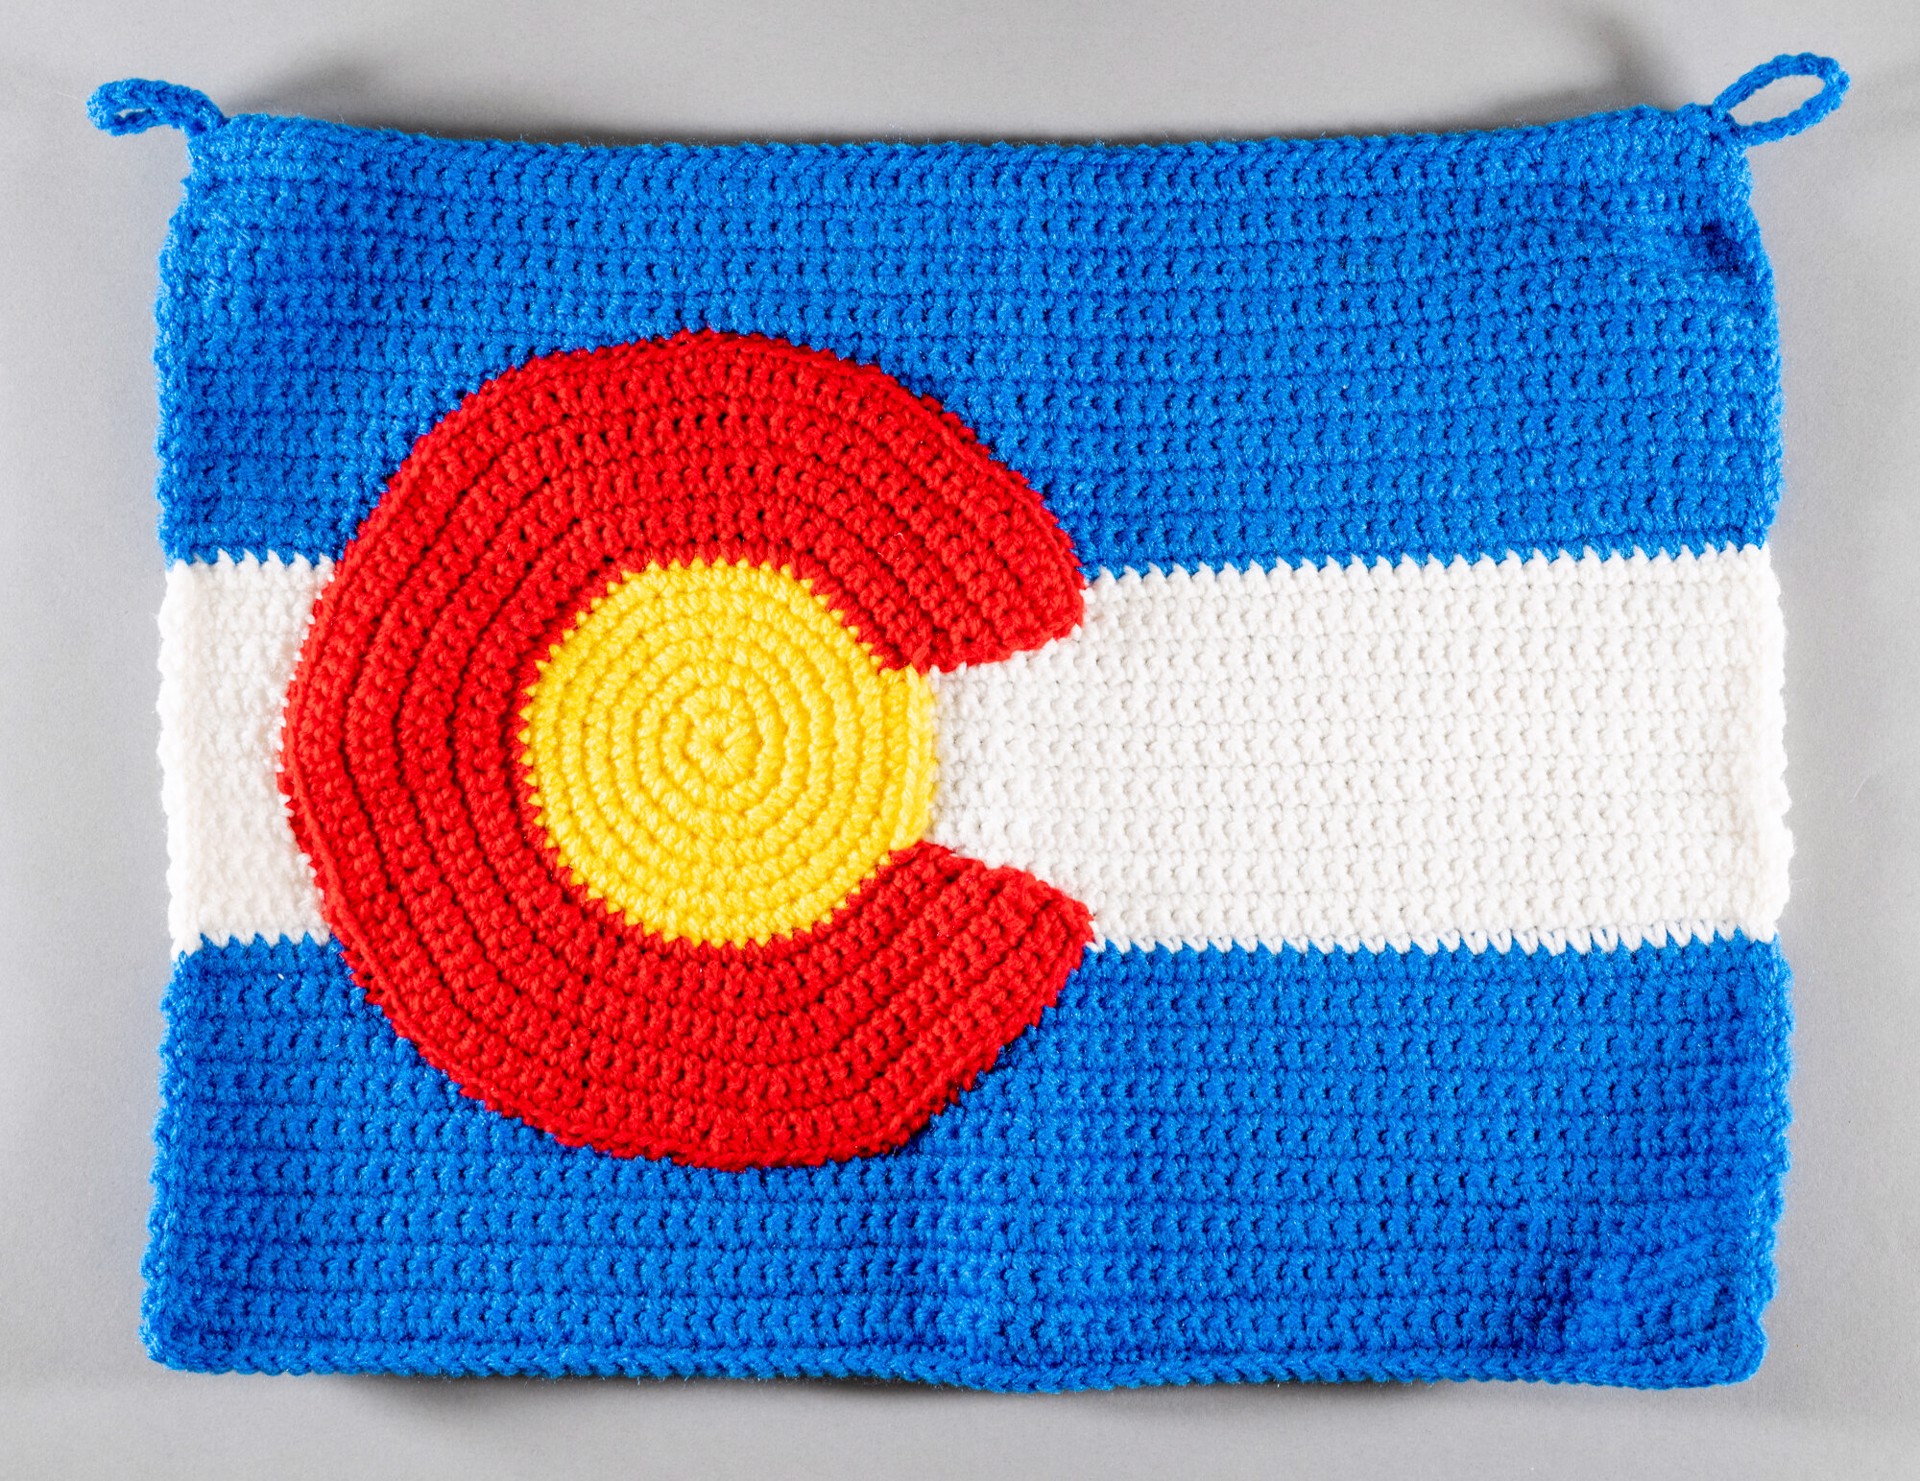 Colorado Flag by Martin W. Williams